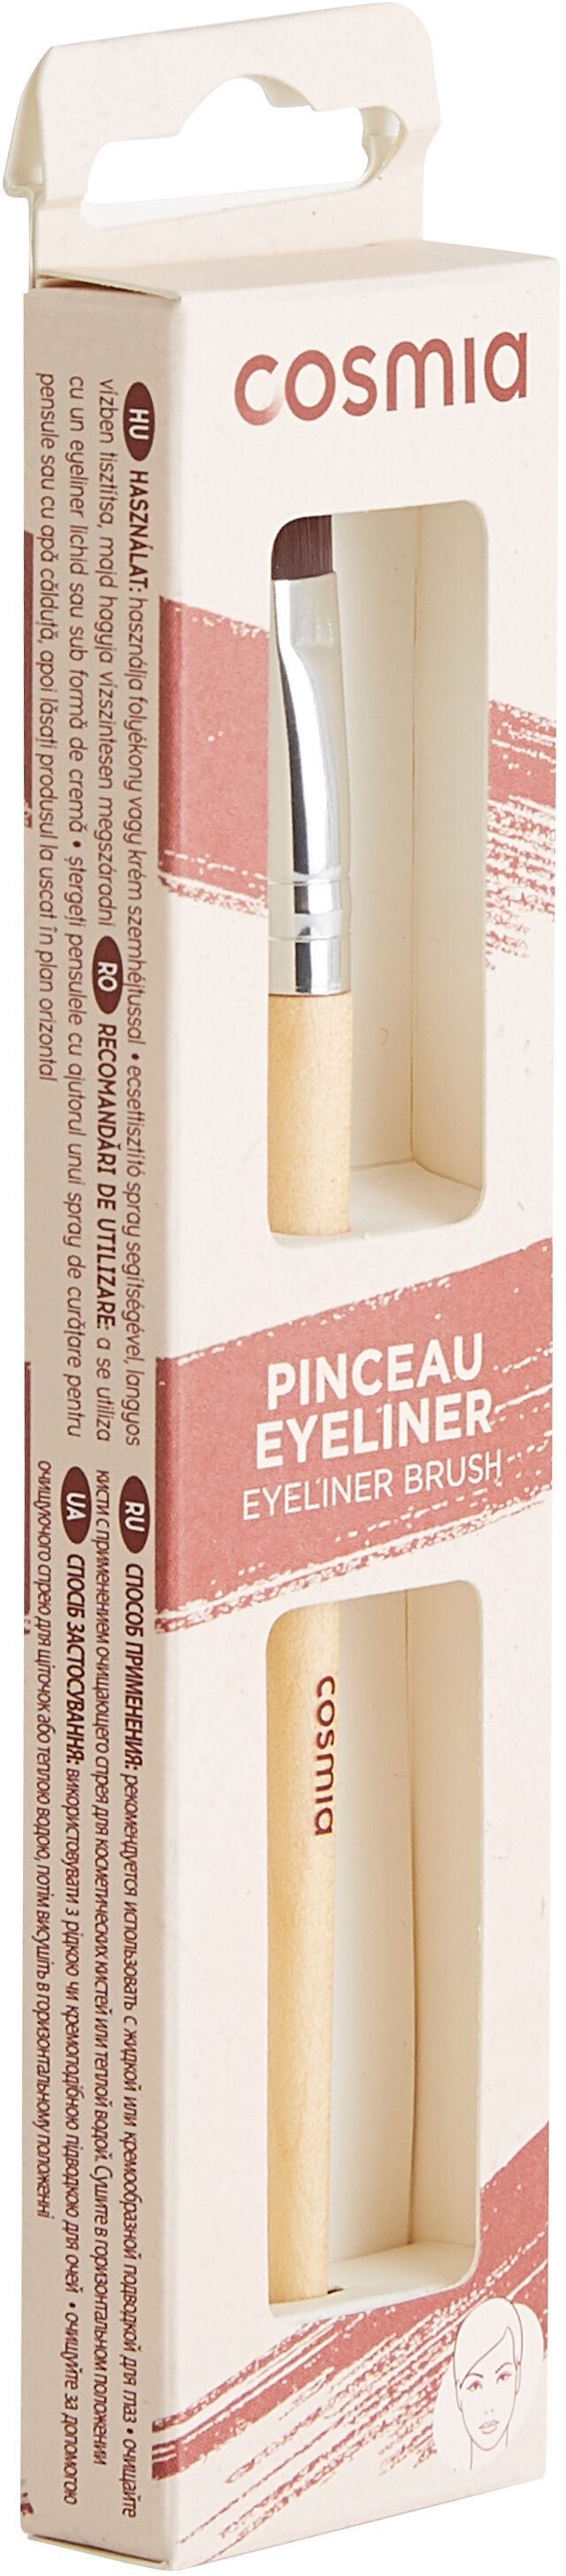 Pinceau eyeliner - Produit - fr